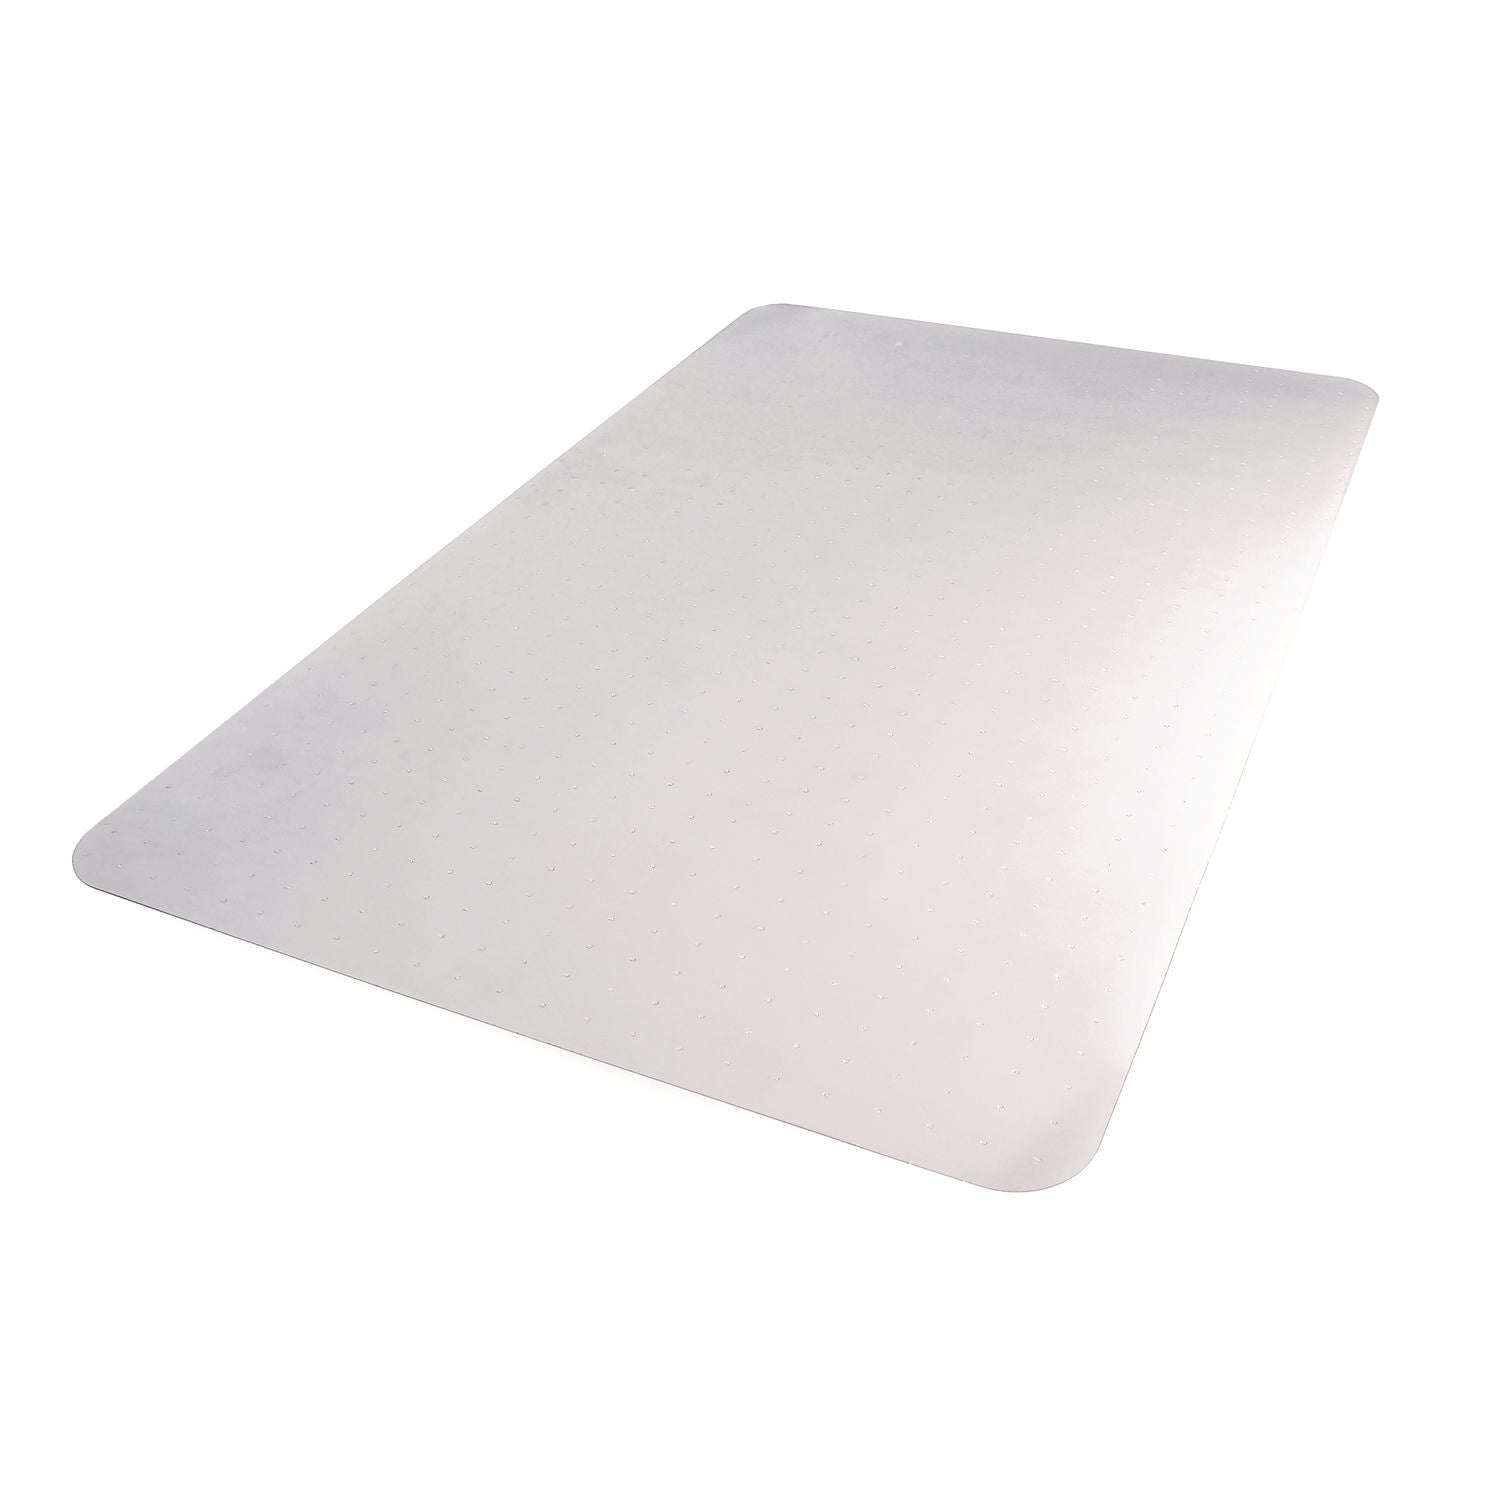 ecotex-marlon-bioplus-rectangular-polycarbonate-chair-mat-for-low-medium-pile-carpets-rectangular-46-x-60-clear_flrnrcmflbg0004 - 3